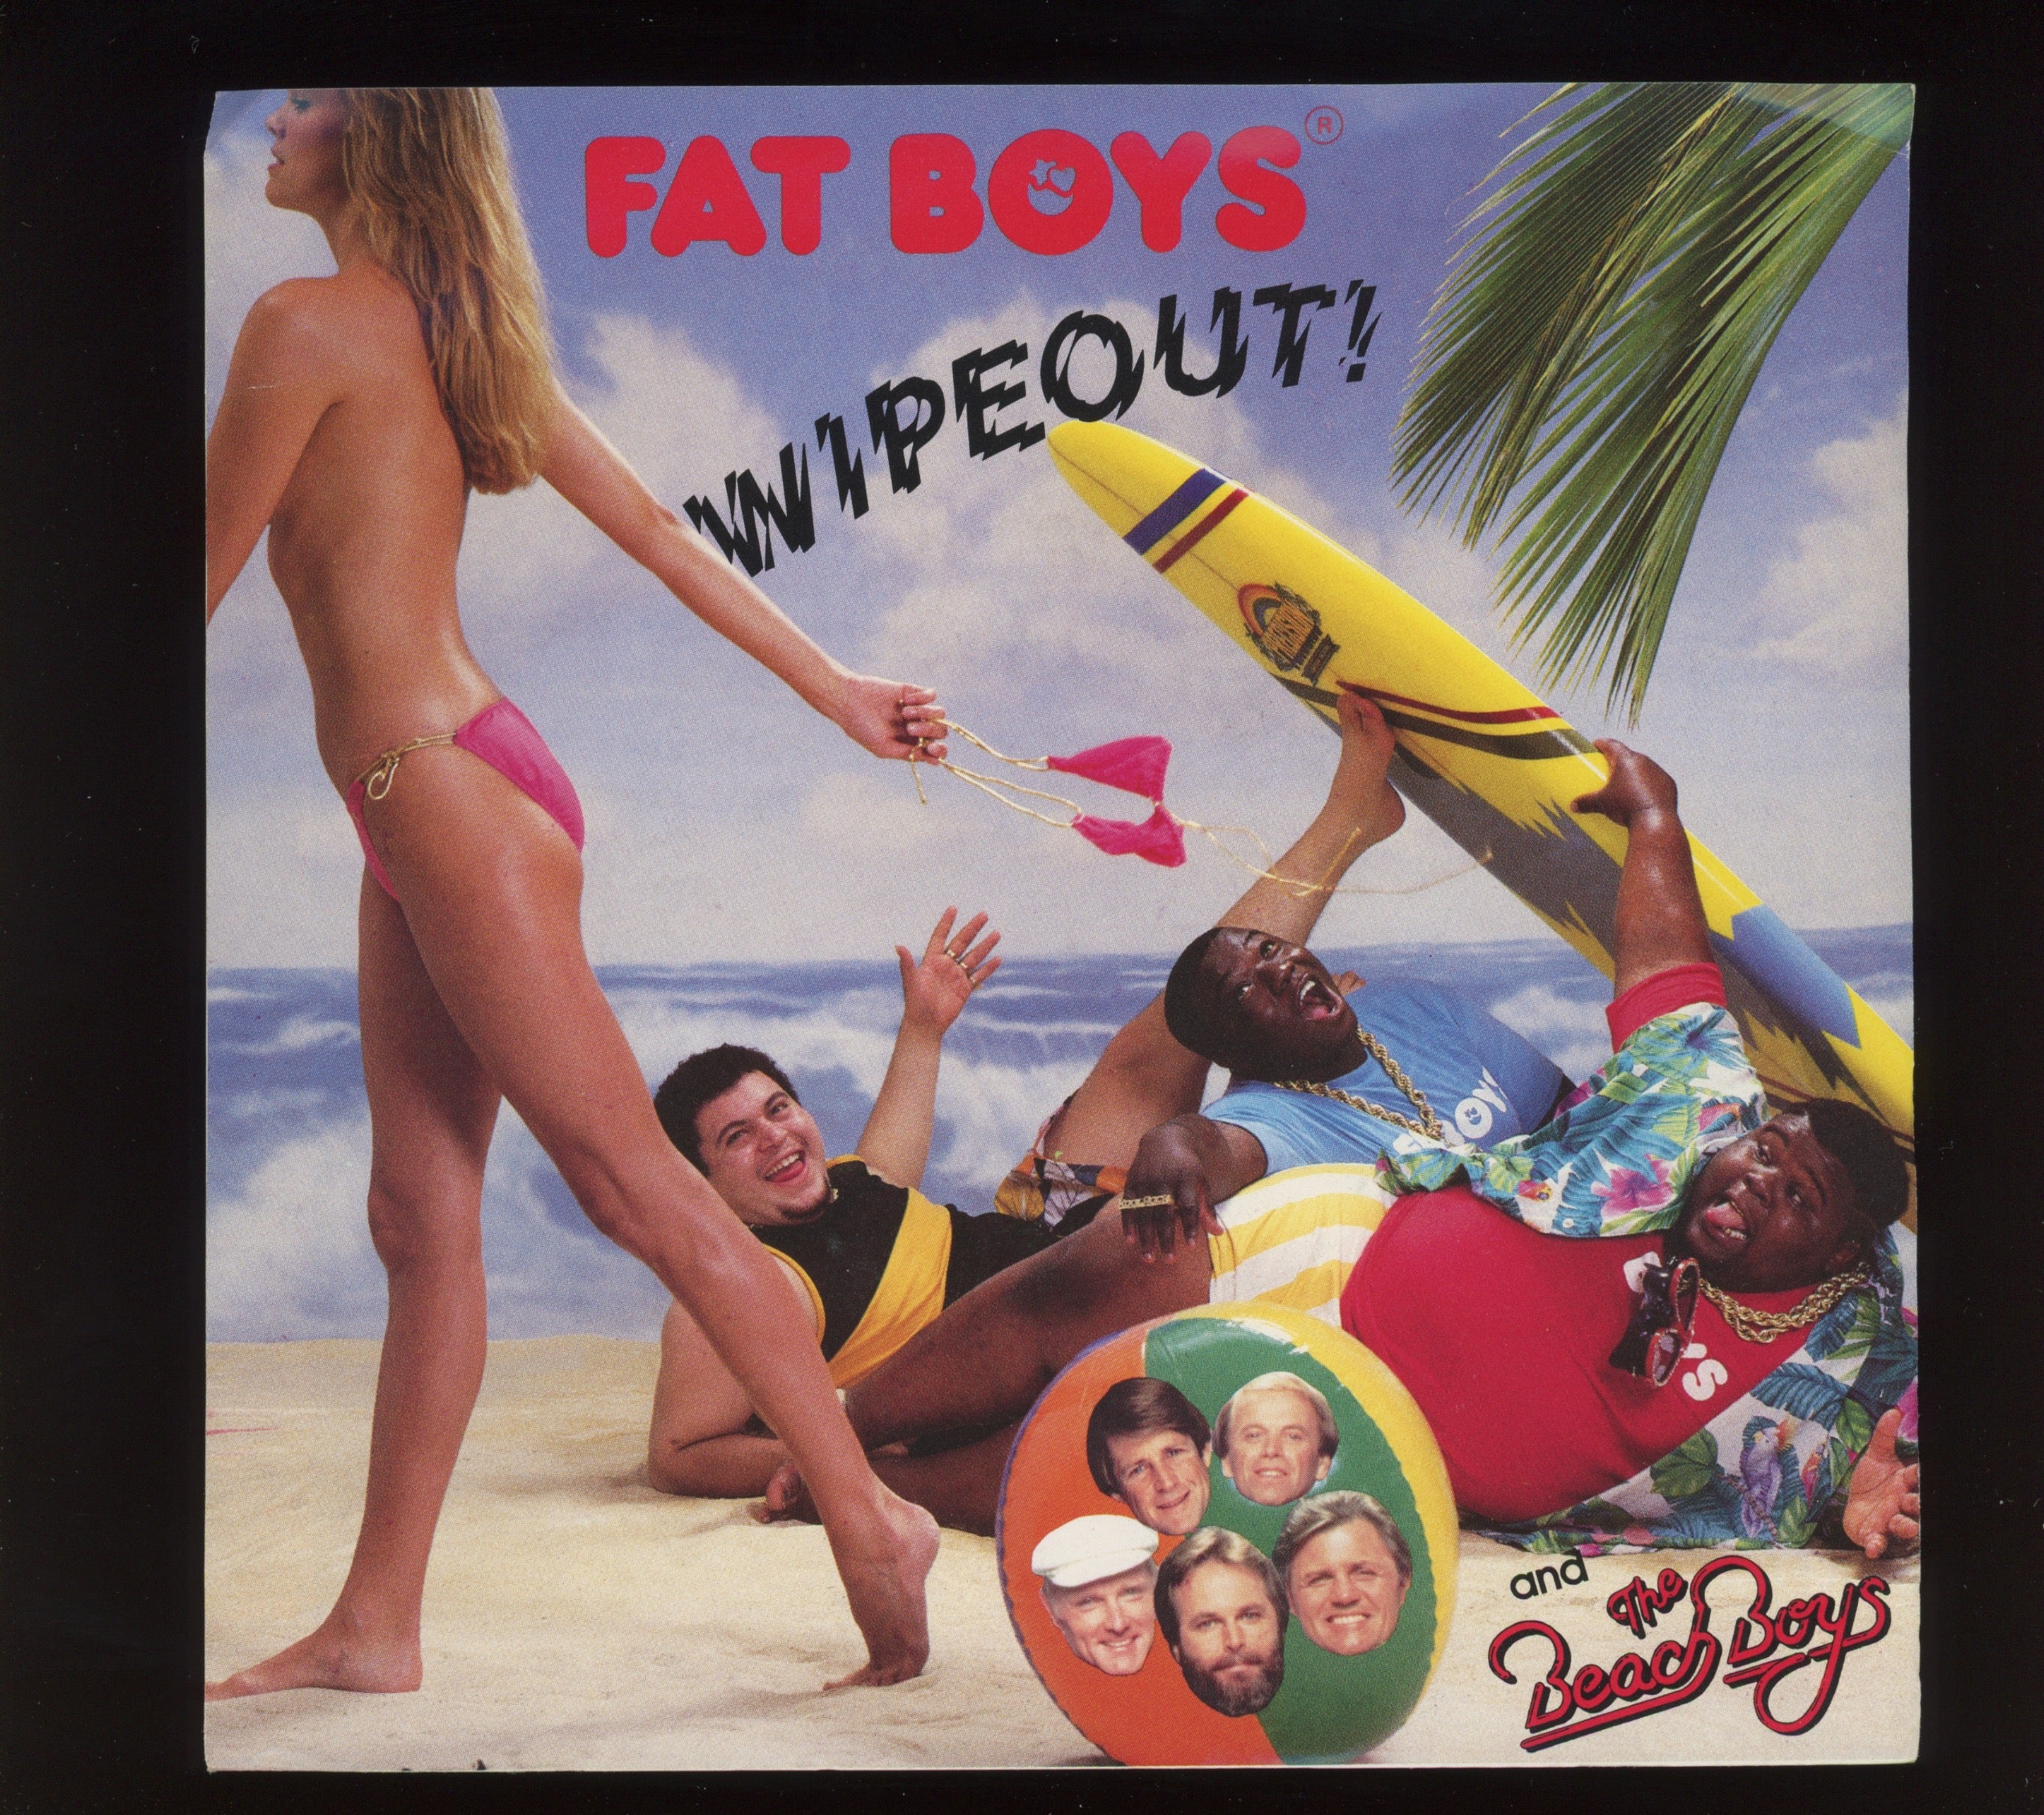 Fat Boys - Wipeout! on Tin Pan Apple